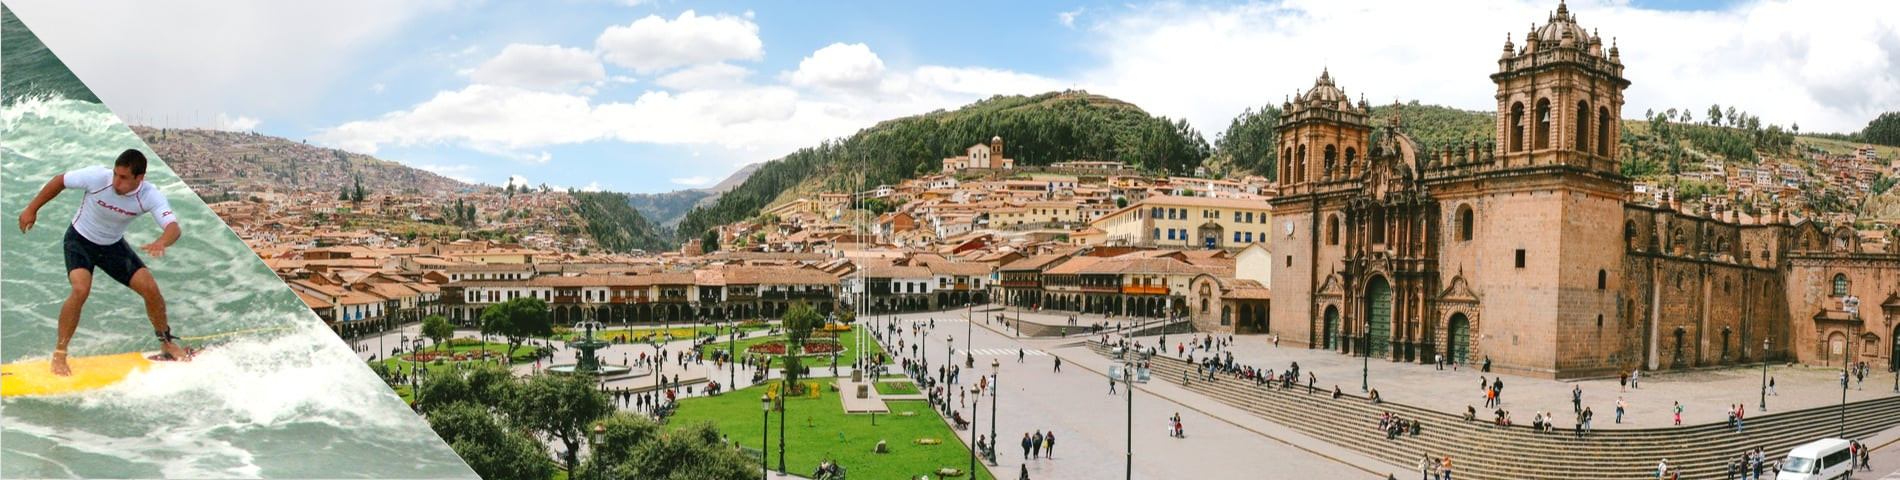 Cuzco - Spanyol & Szörf